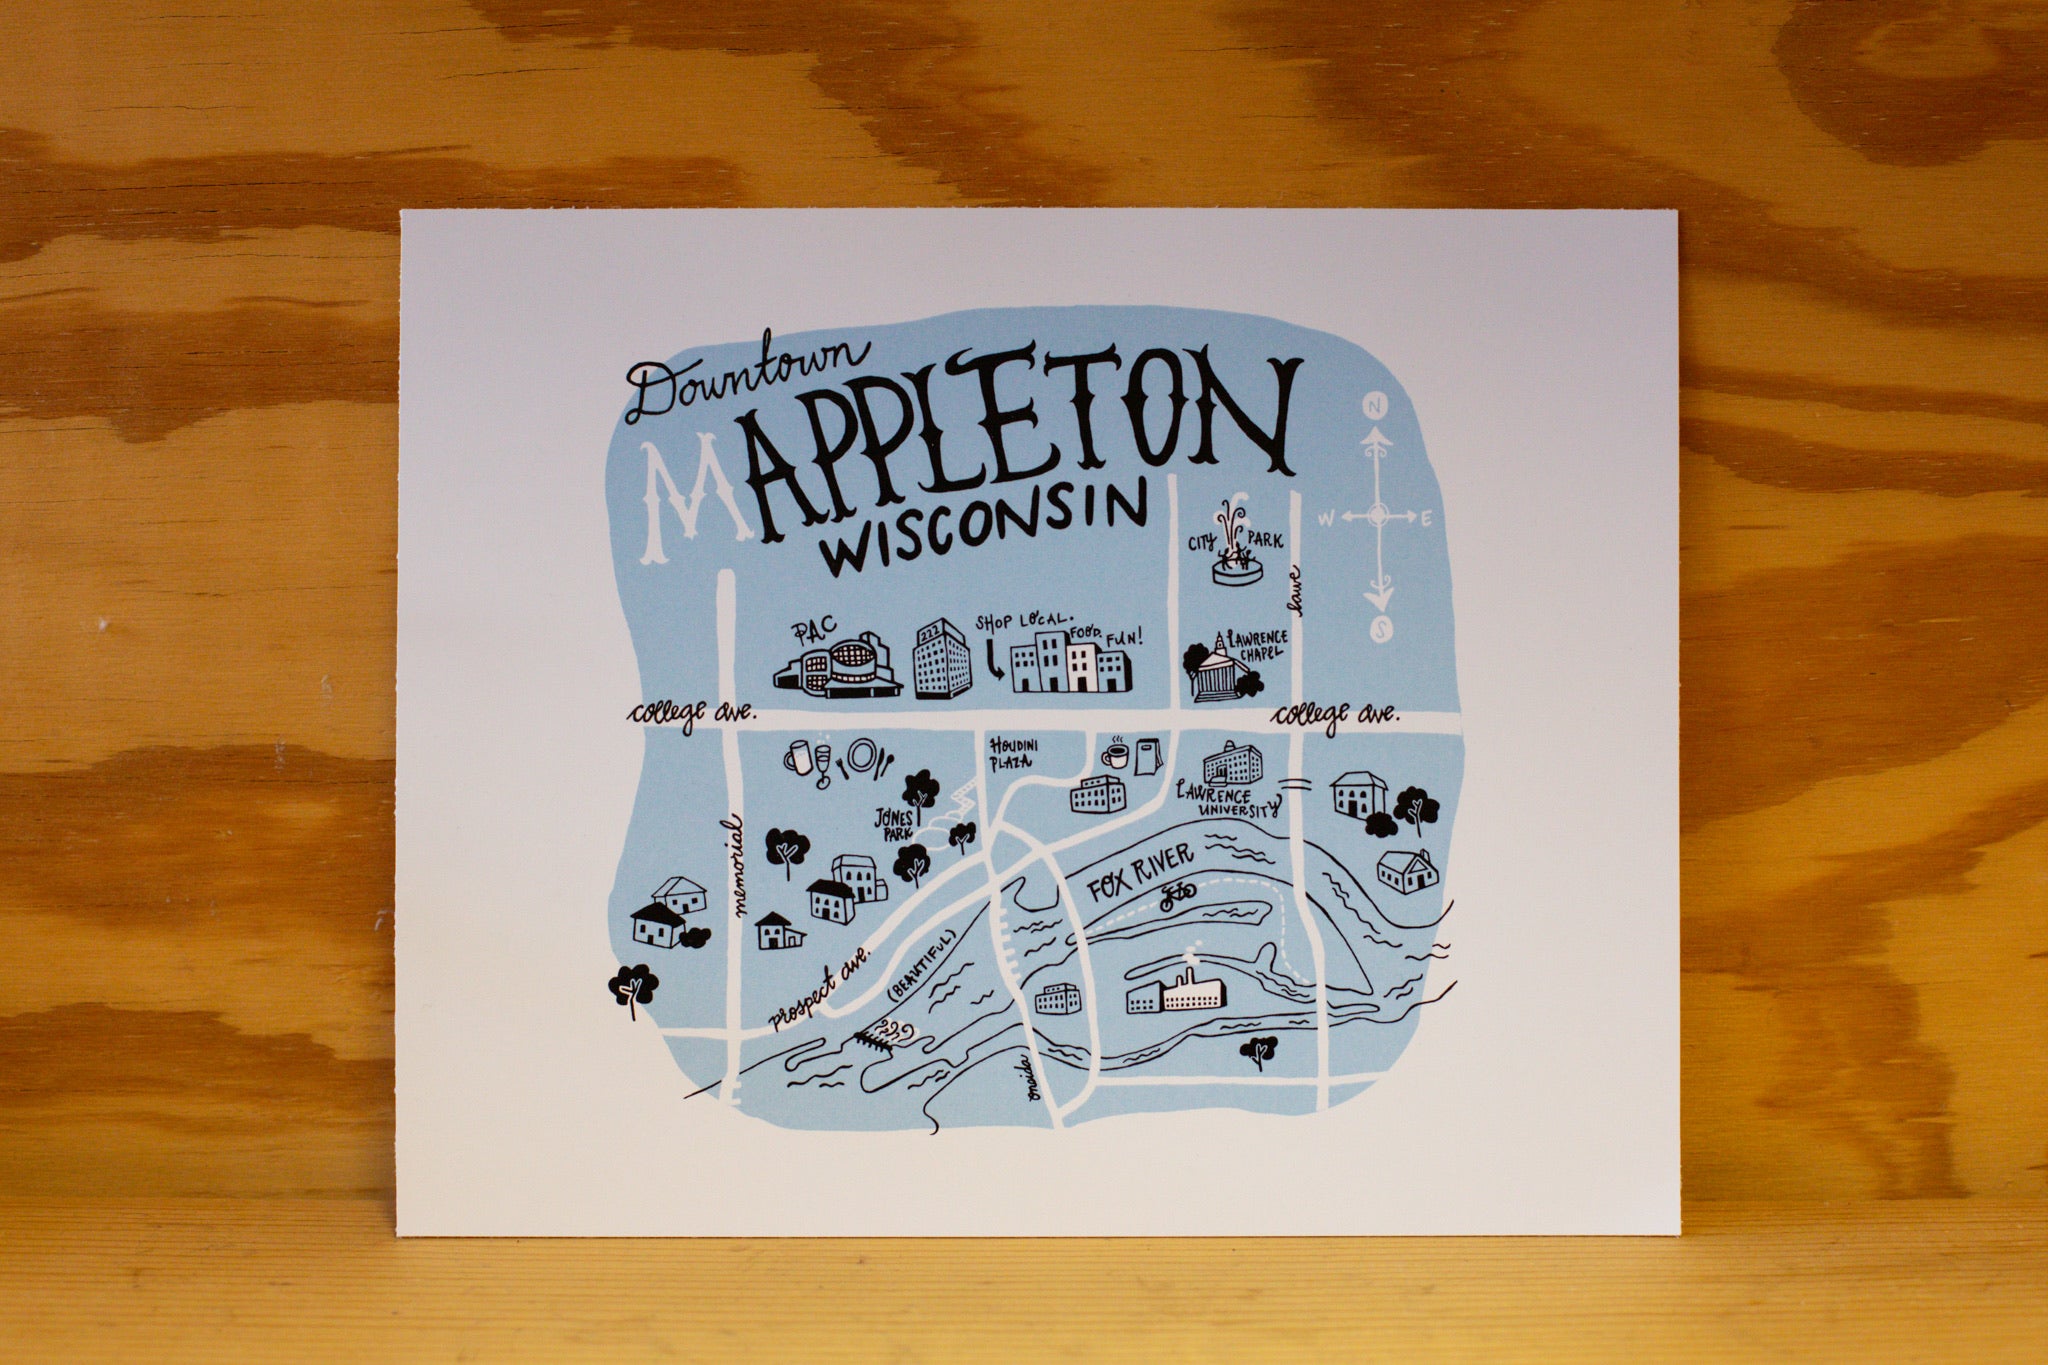 Mappleton 8x10” print